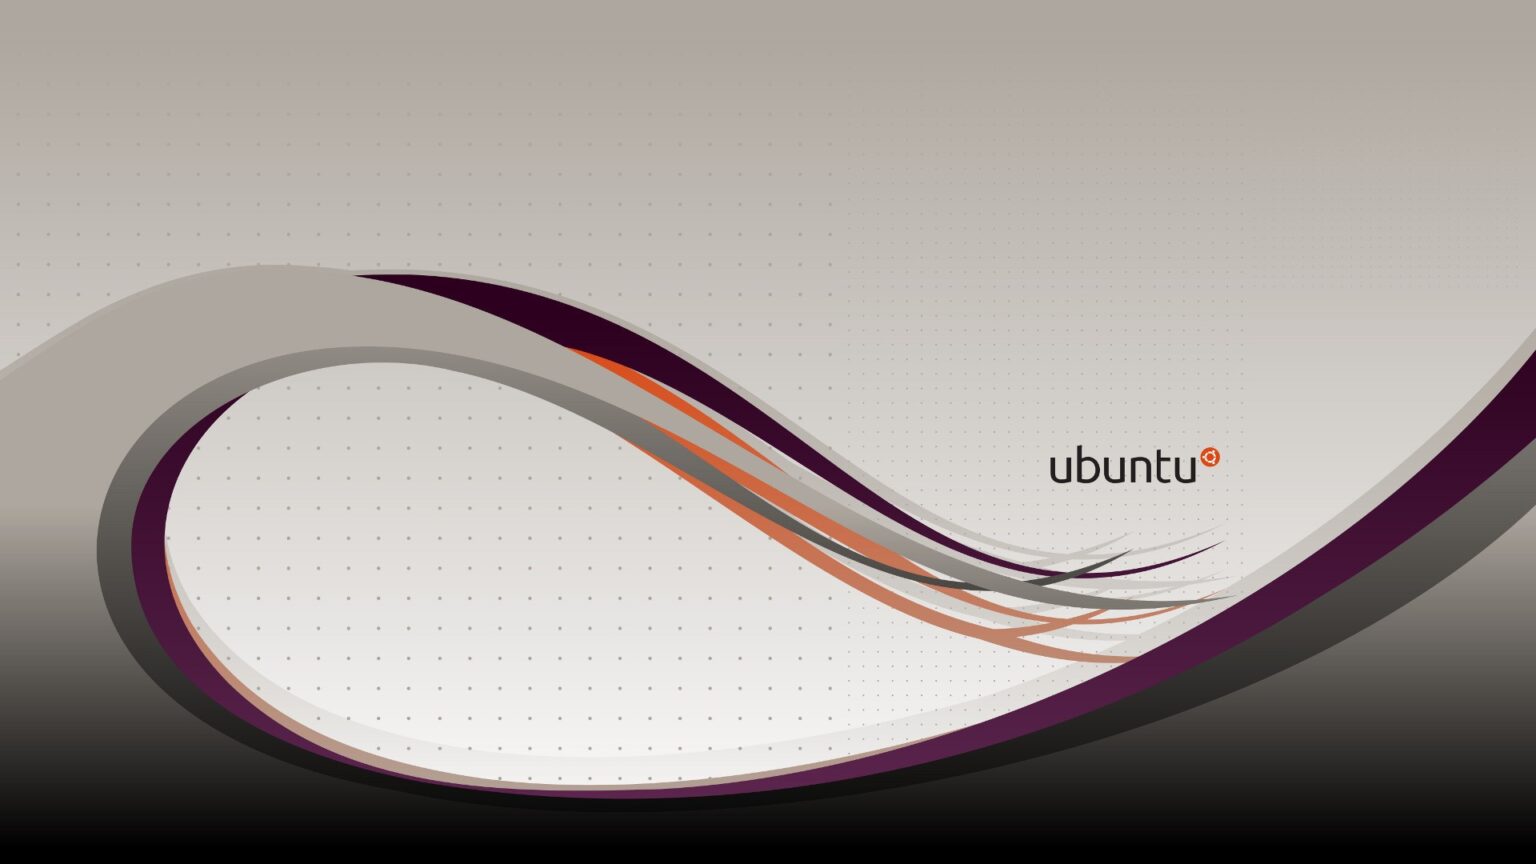 install vmware workstation player ubuntu 20.04